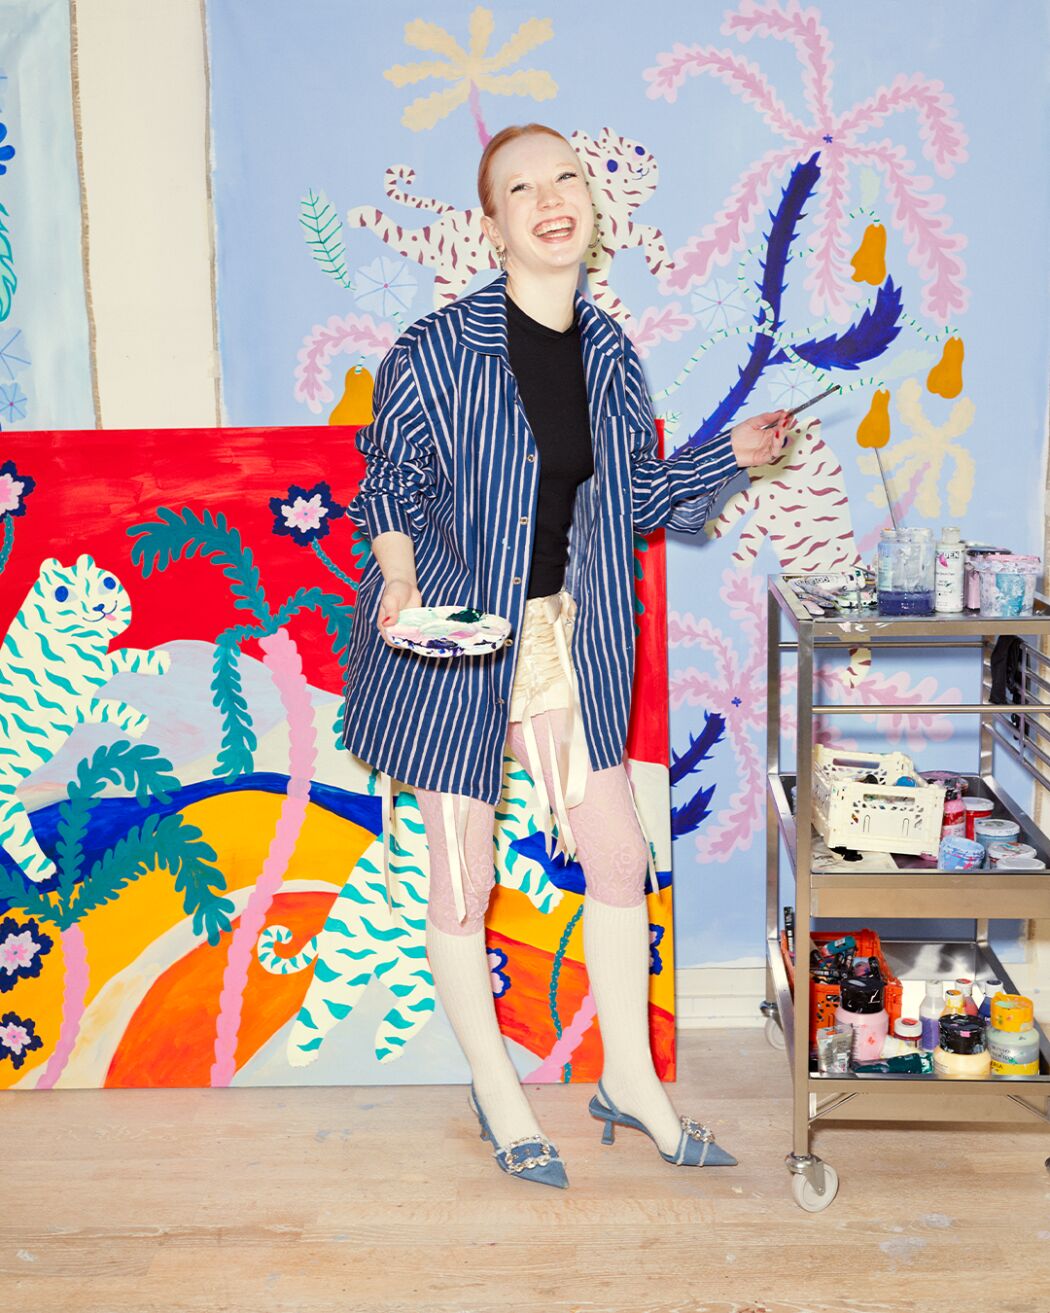 The illustration artist Yoyo Nasty in her studio